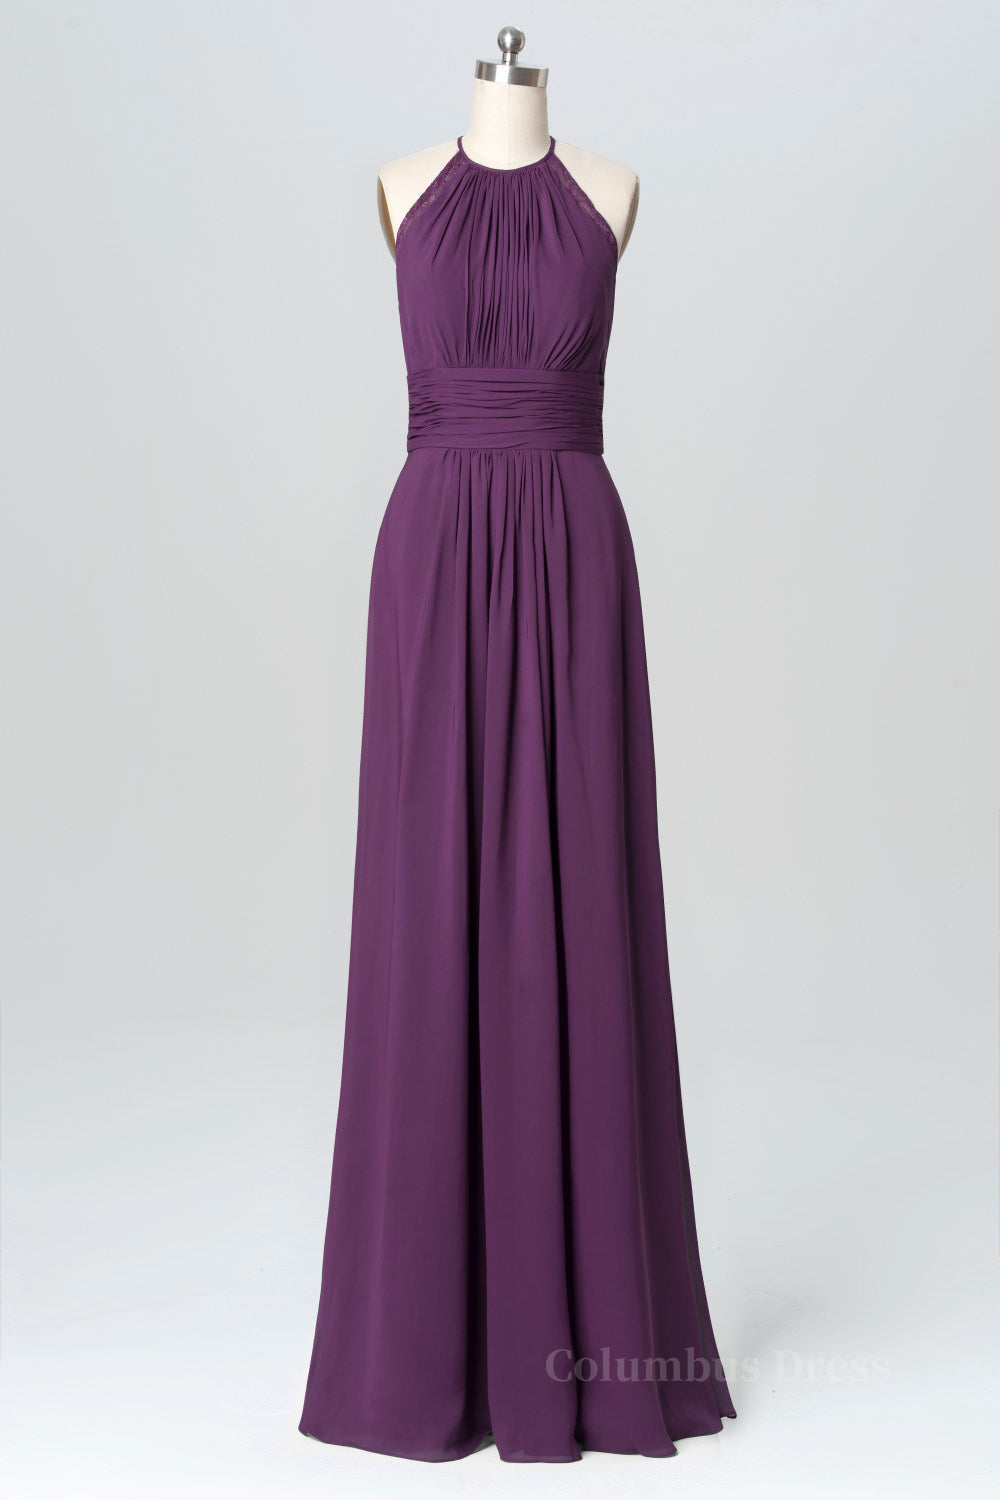 Halter Purple Chiffon A-line Long Corset Bridesmaid Dress outfit, Wedding